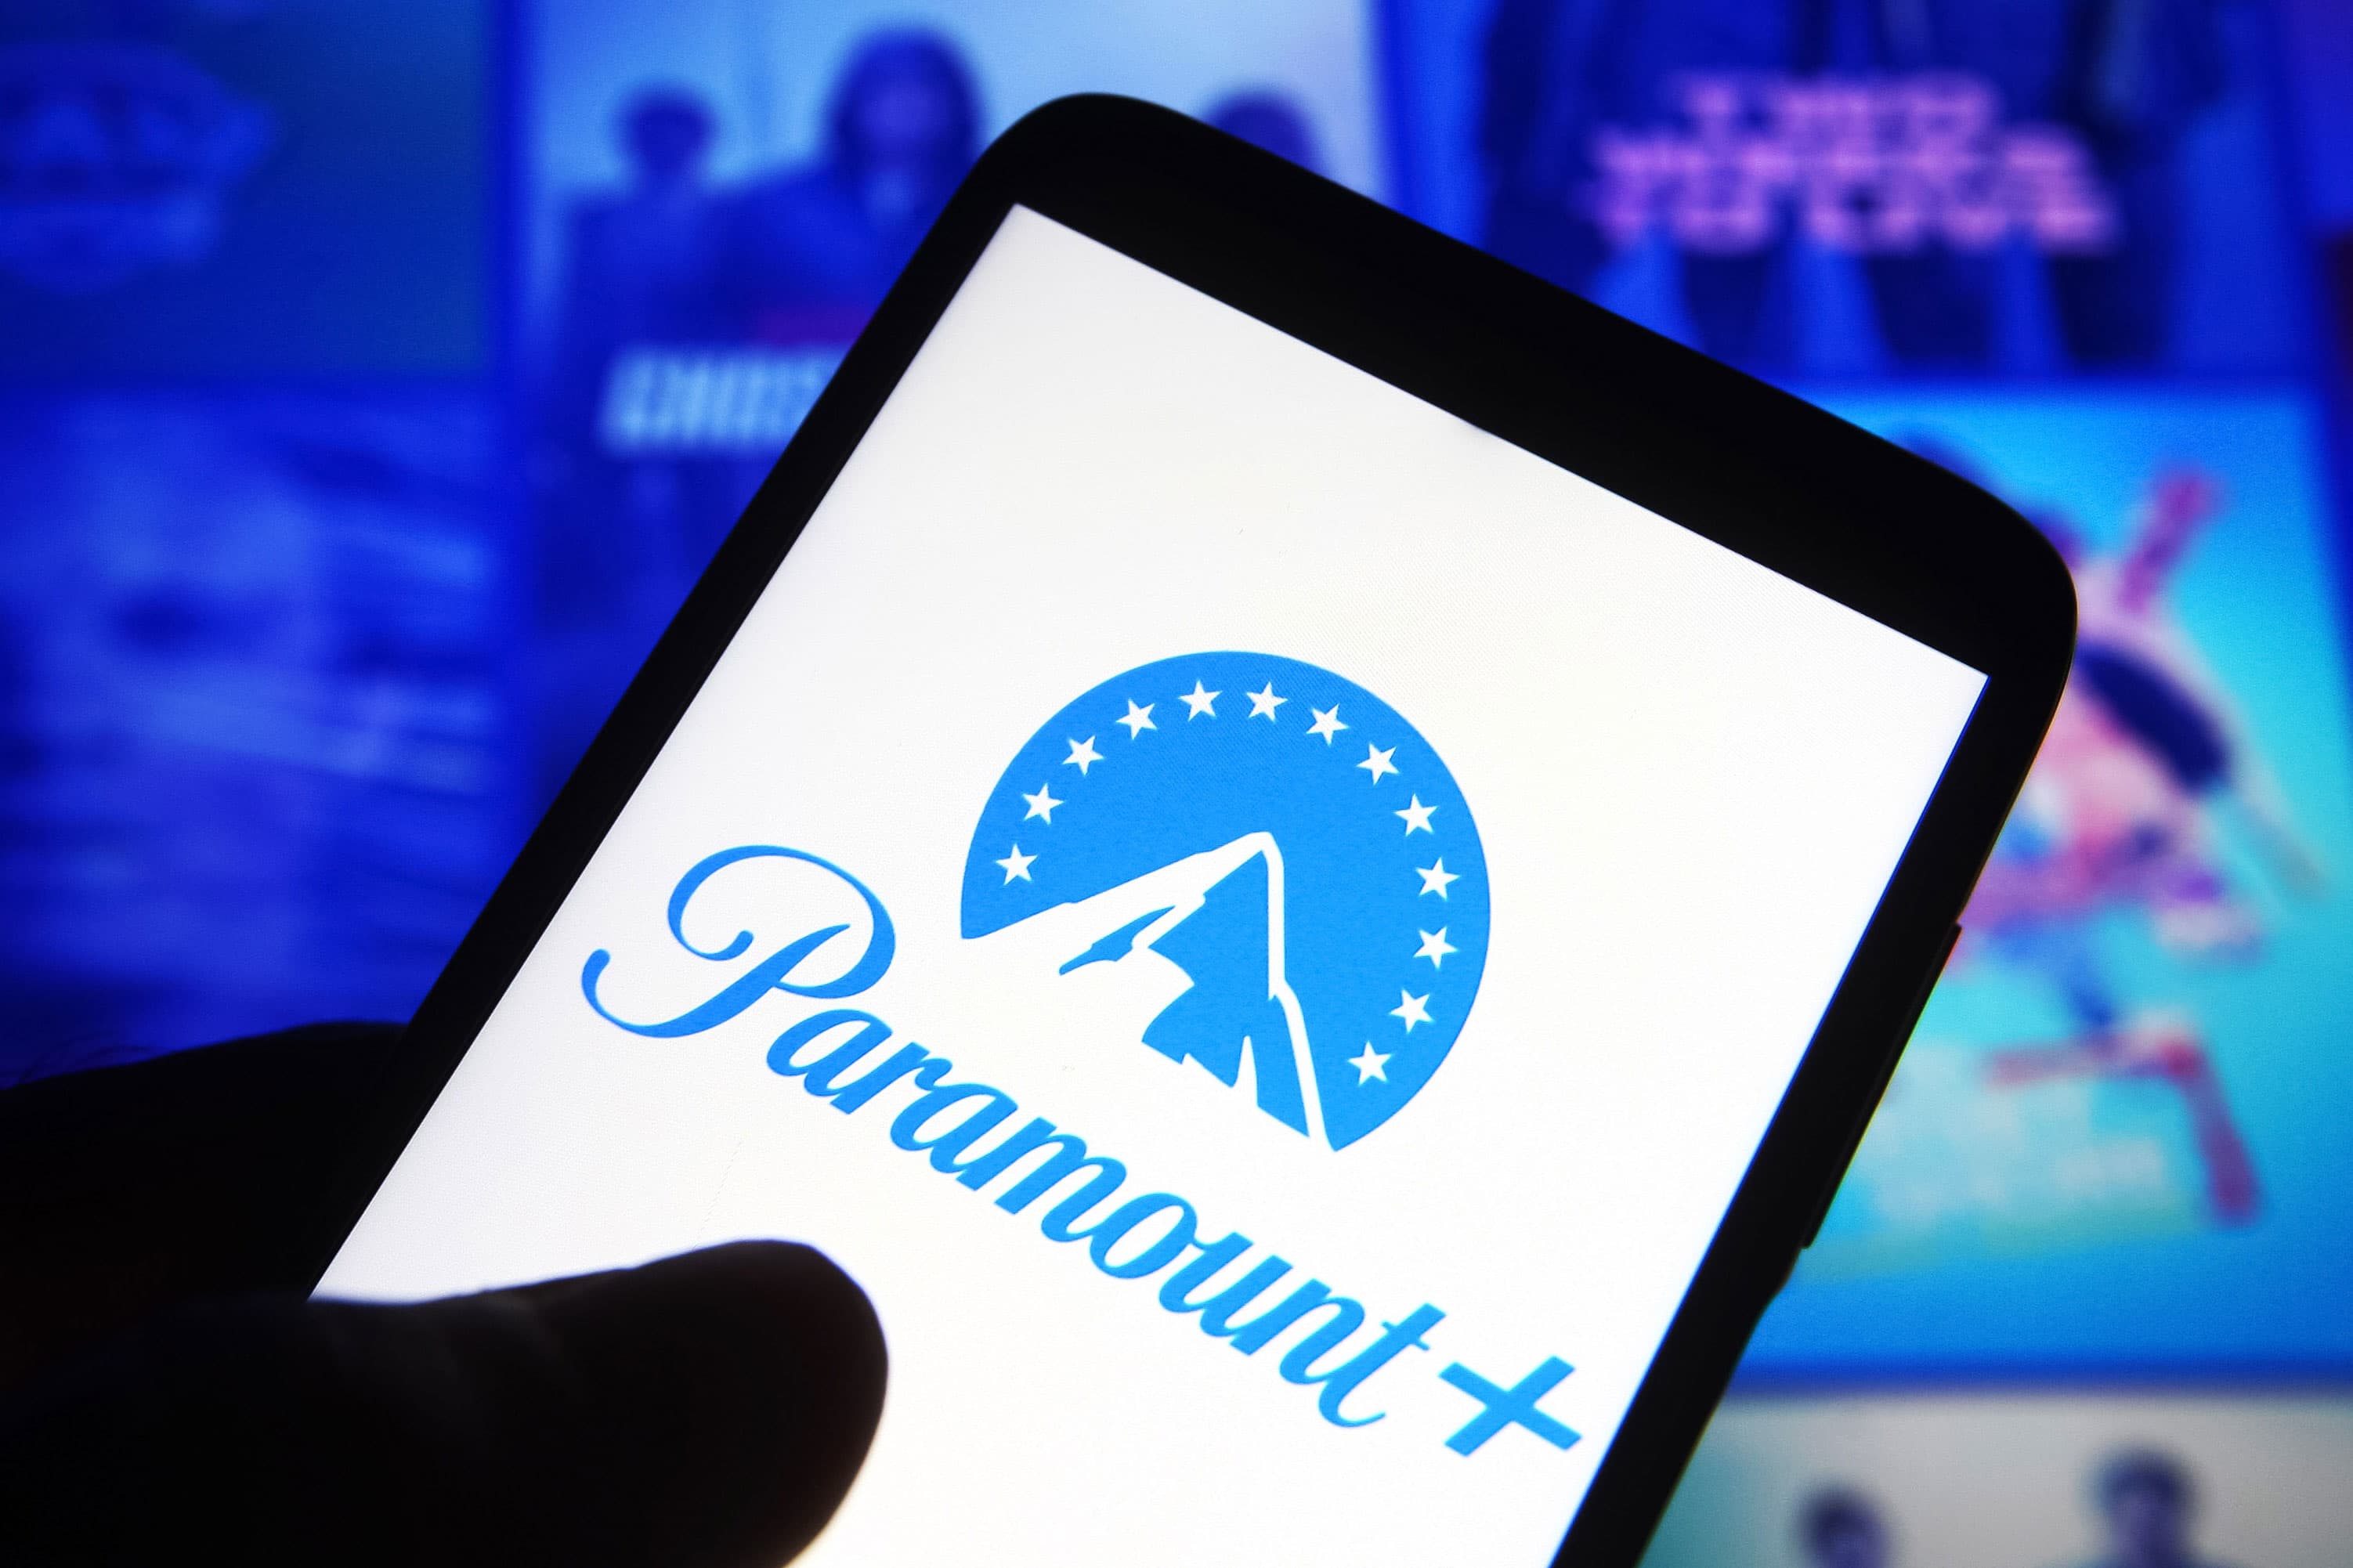 Paramount Global (PARA) Q1 earnings